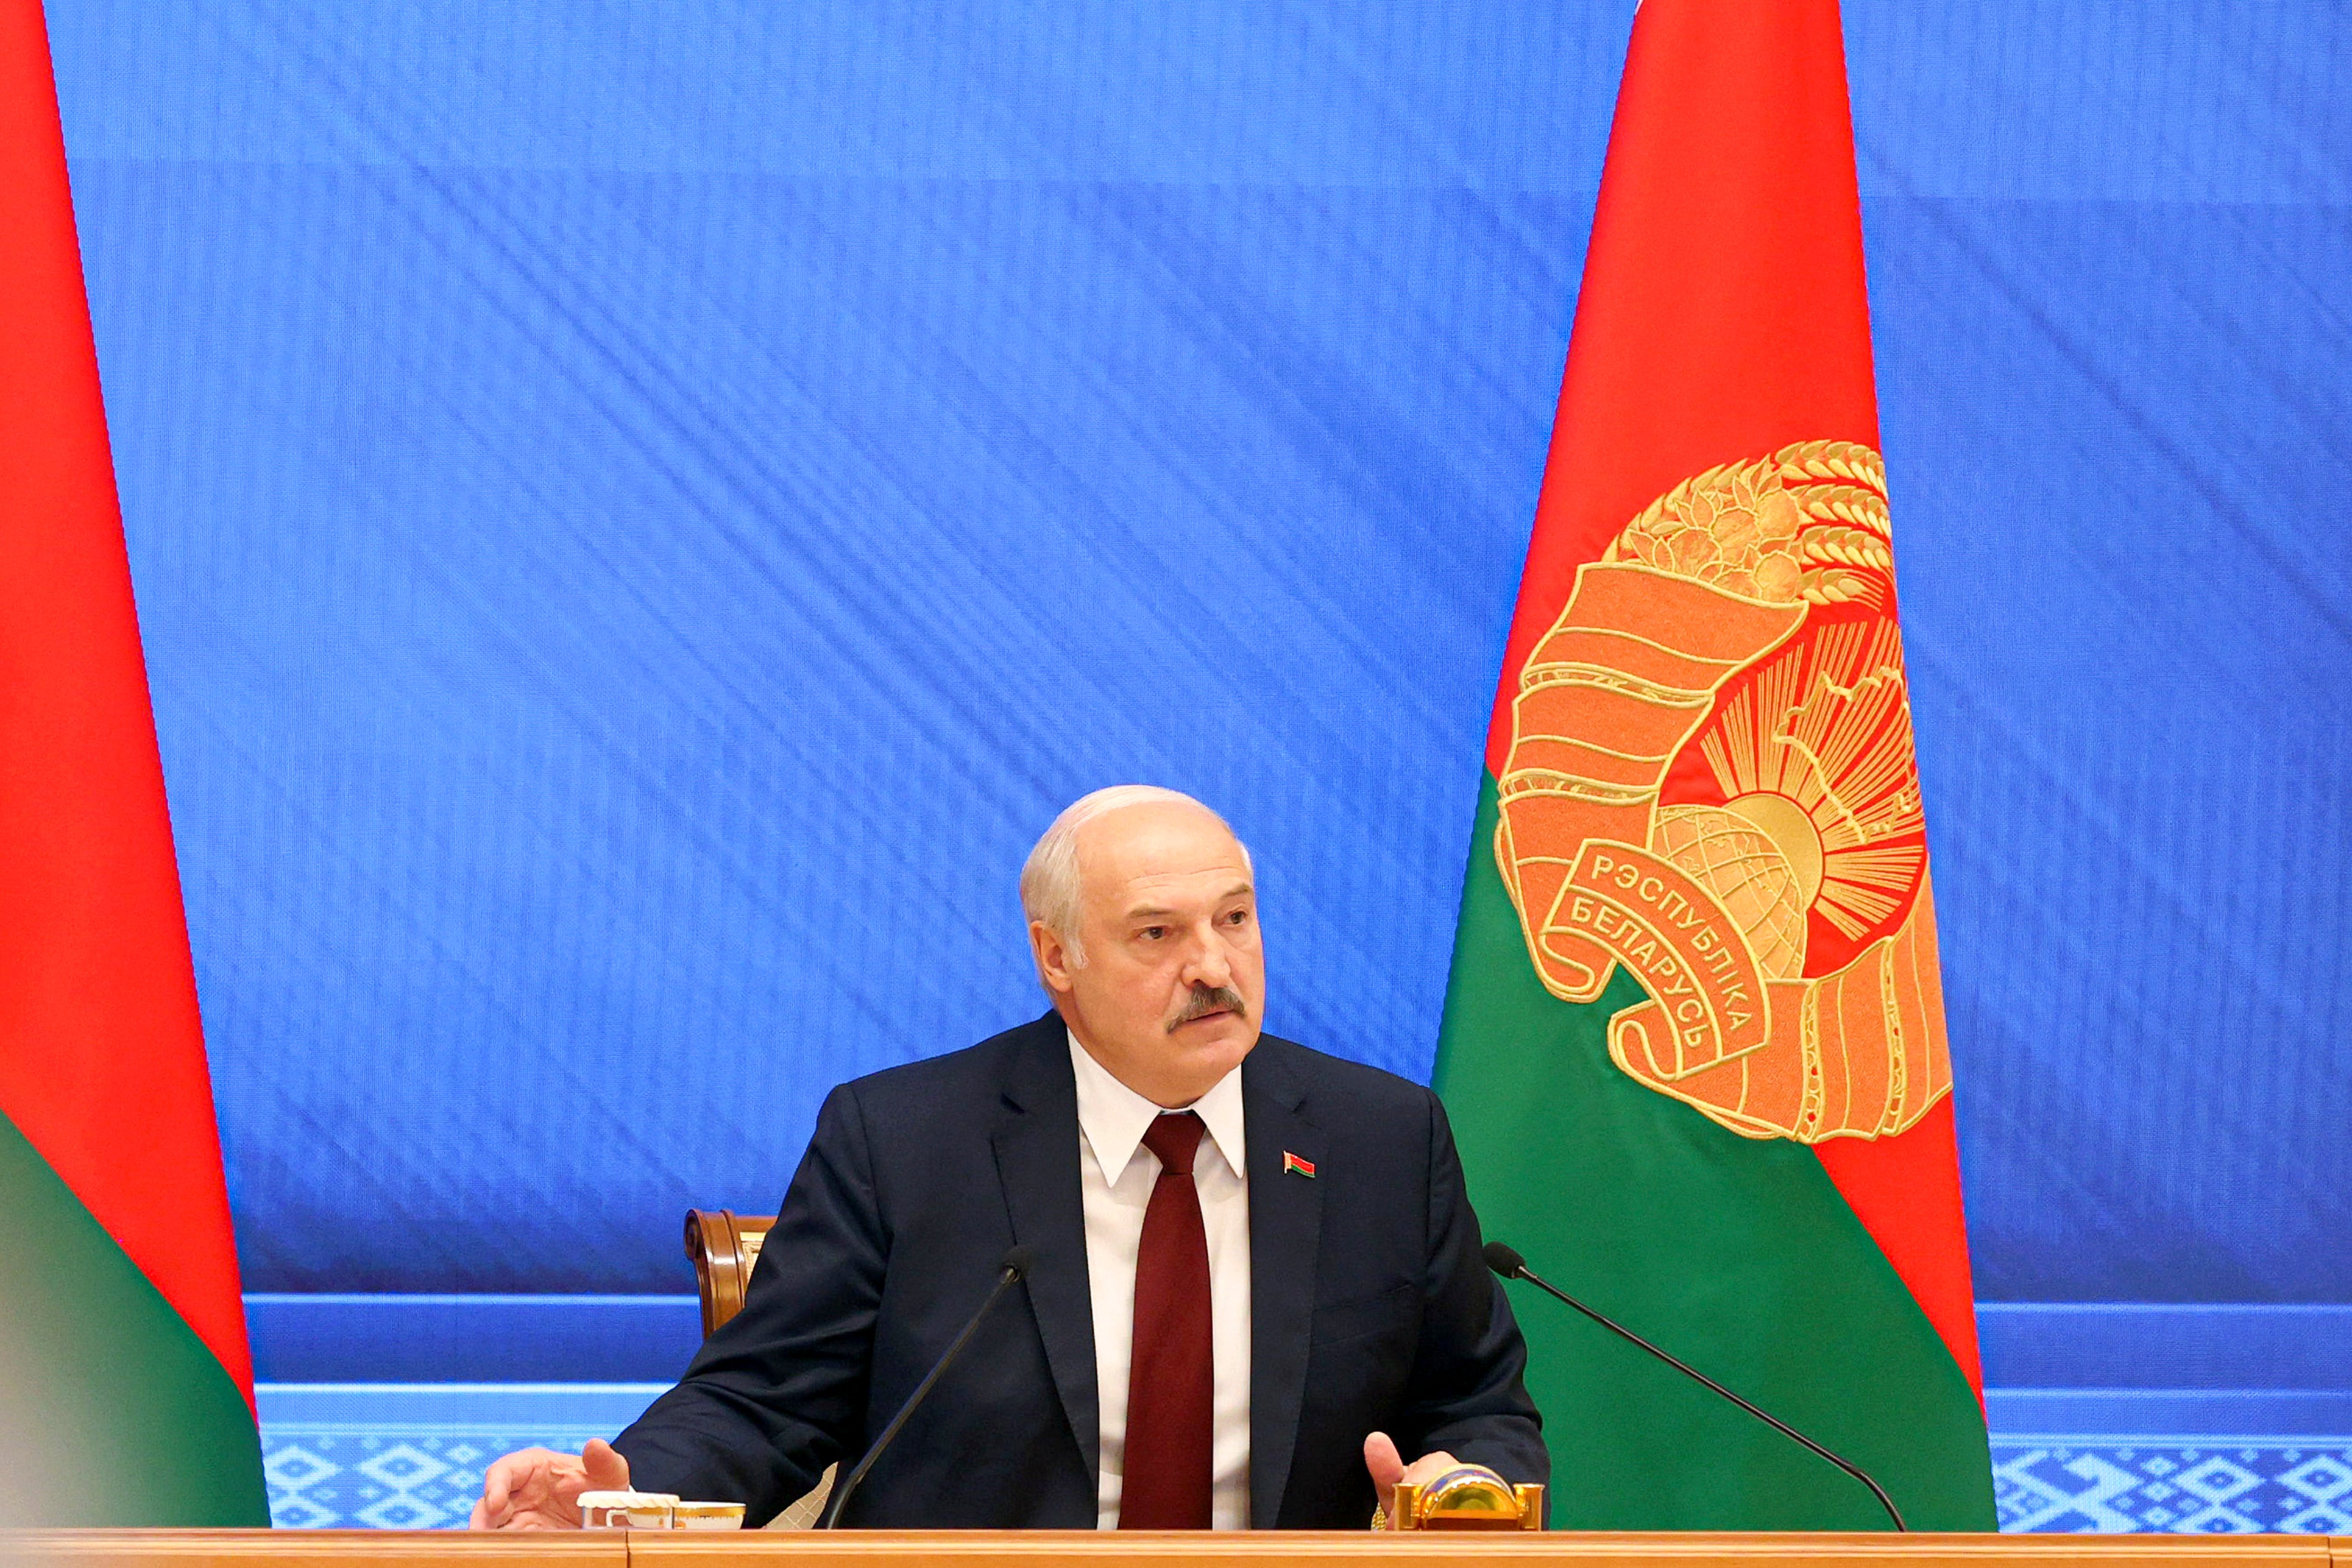 Belarusian president Alexander Lukashenko speaks during an annual press conference in Minsk, Belarus